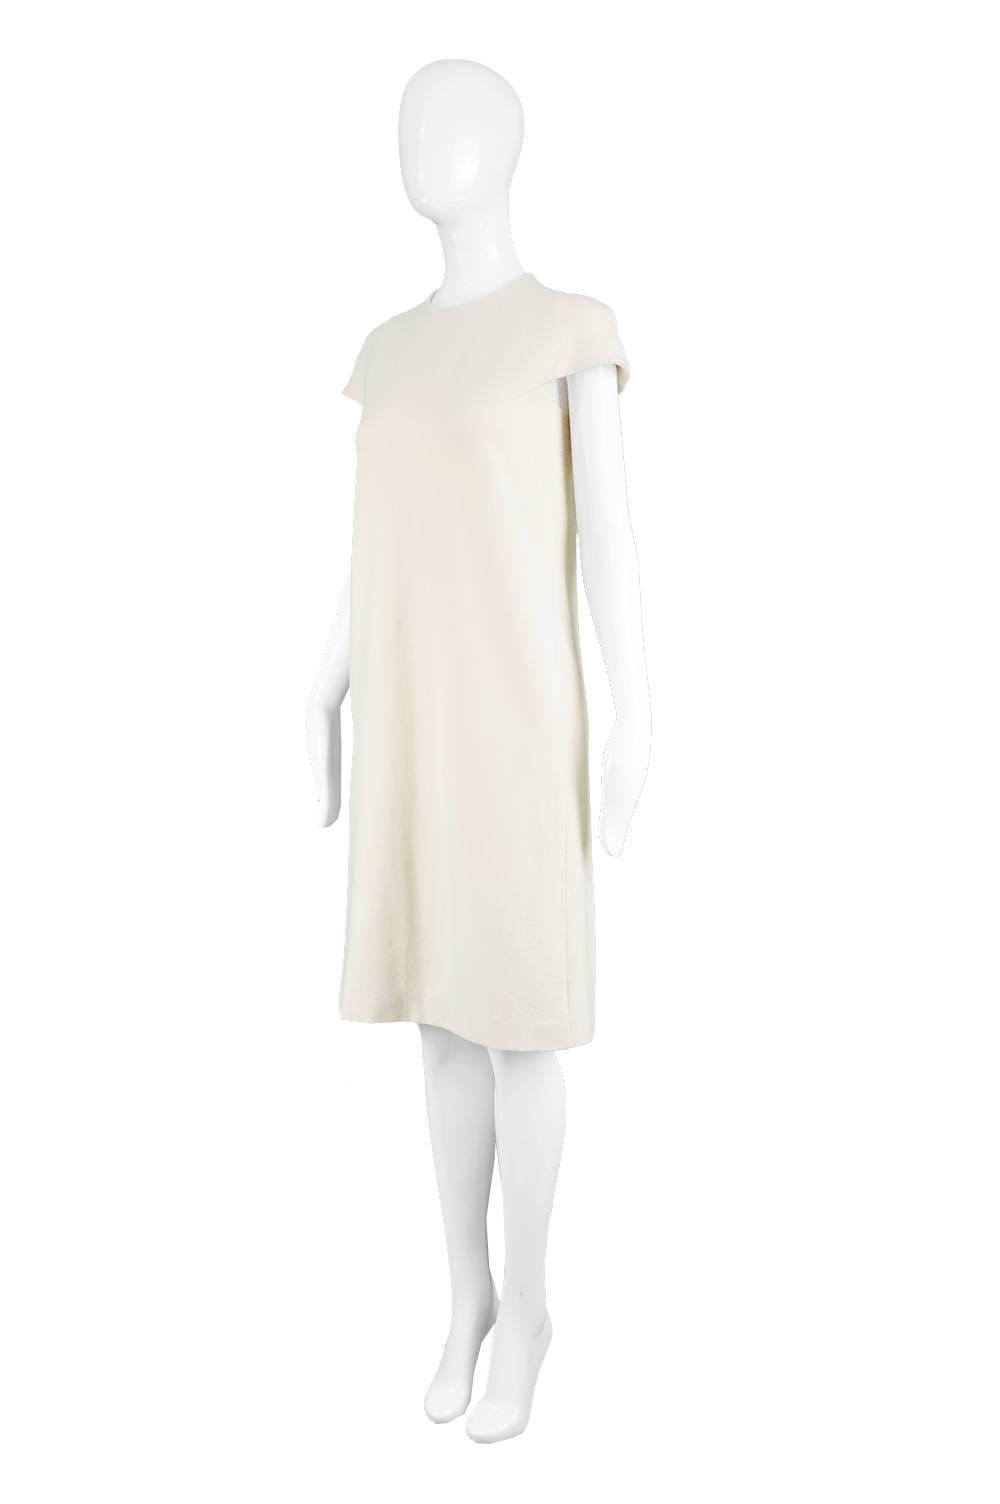 Women's Callaghan Vintage Minimalist Architectural Cream Wool Shift Dress, 1990s 